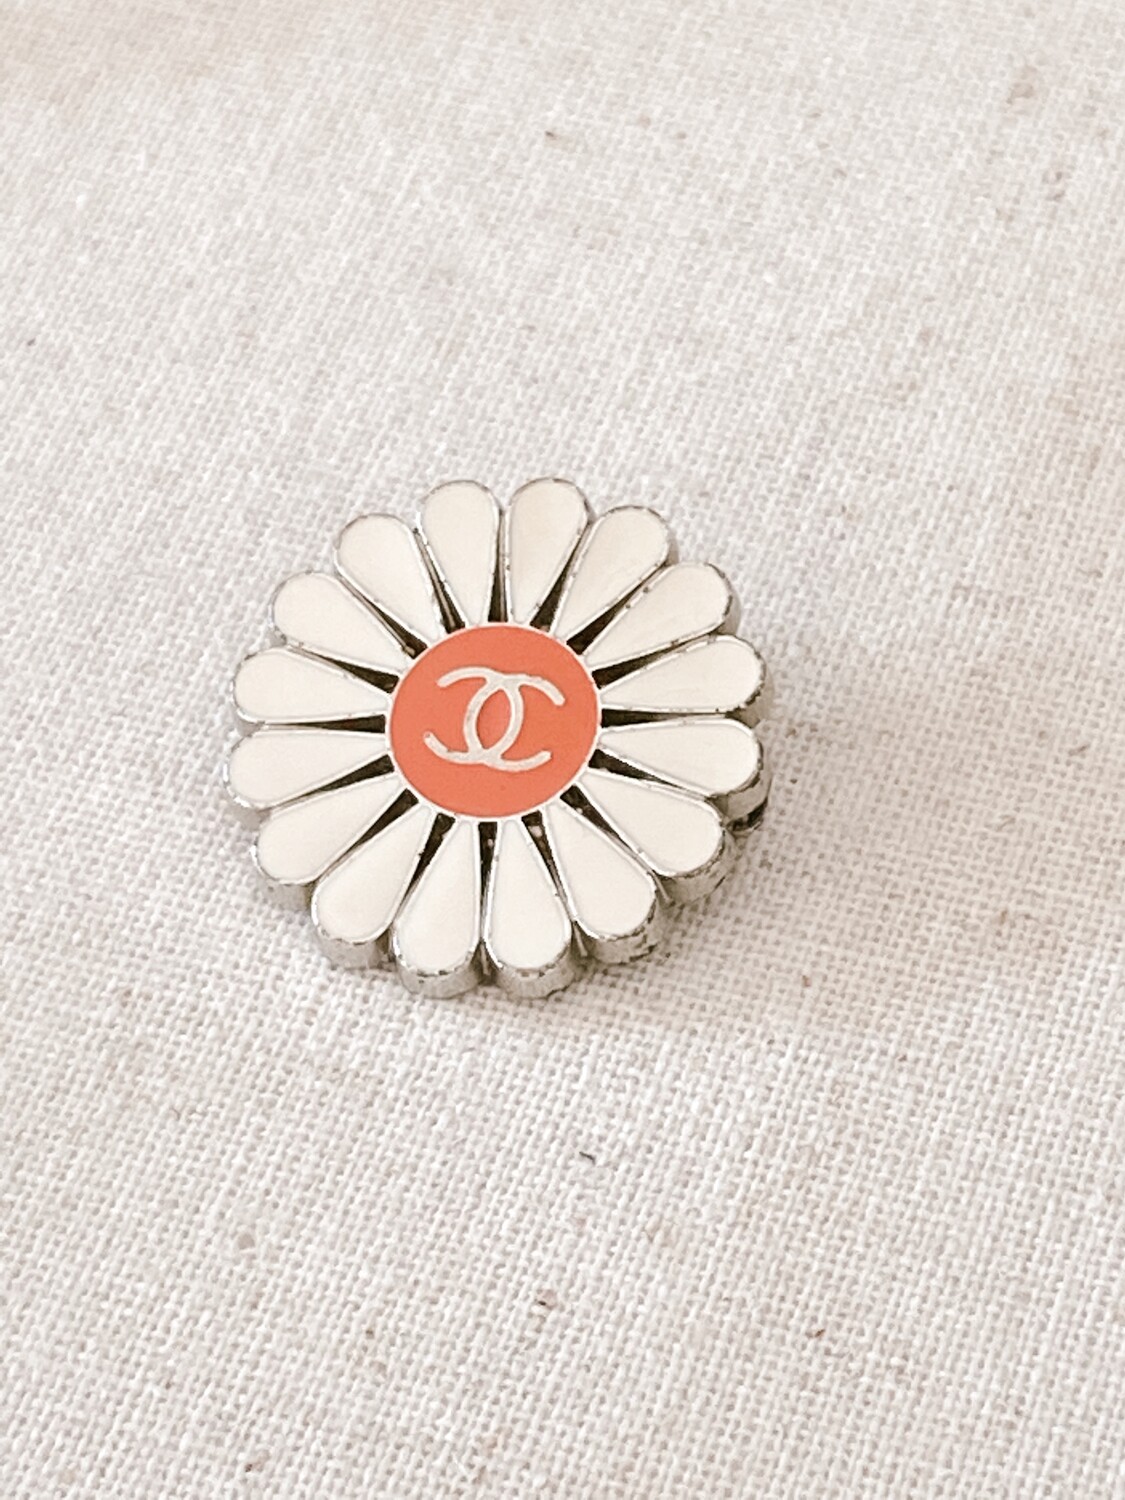 chanel logo pin